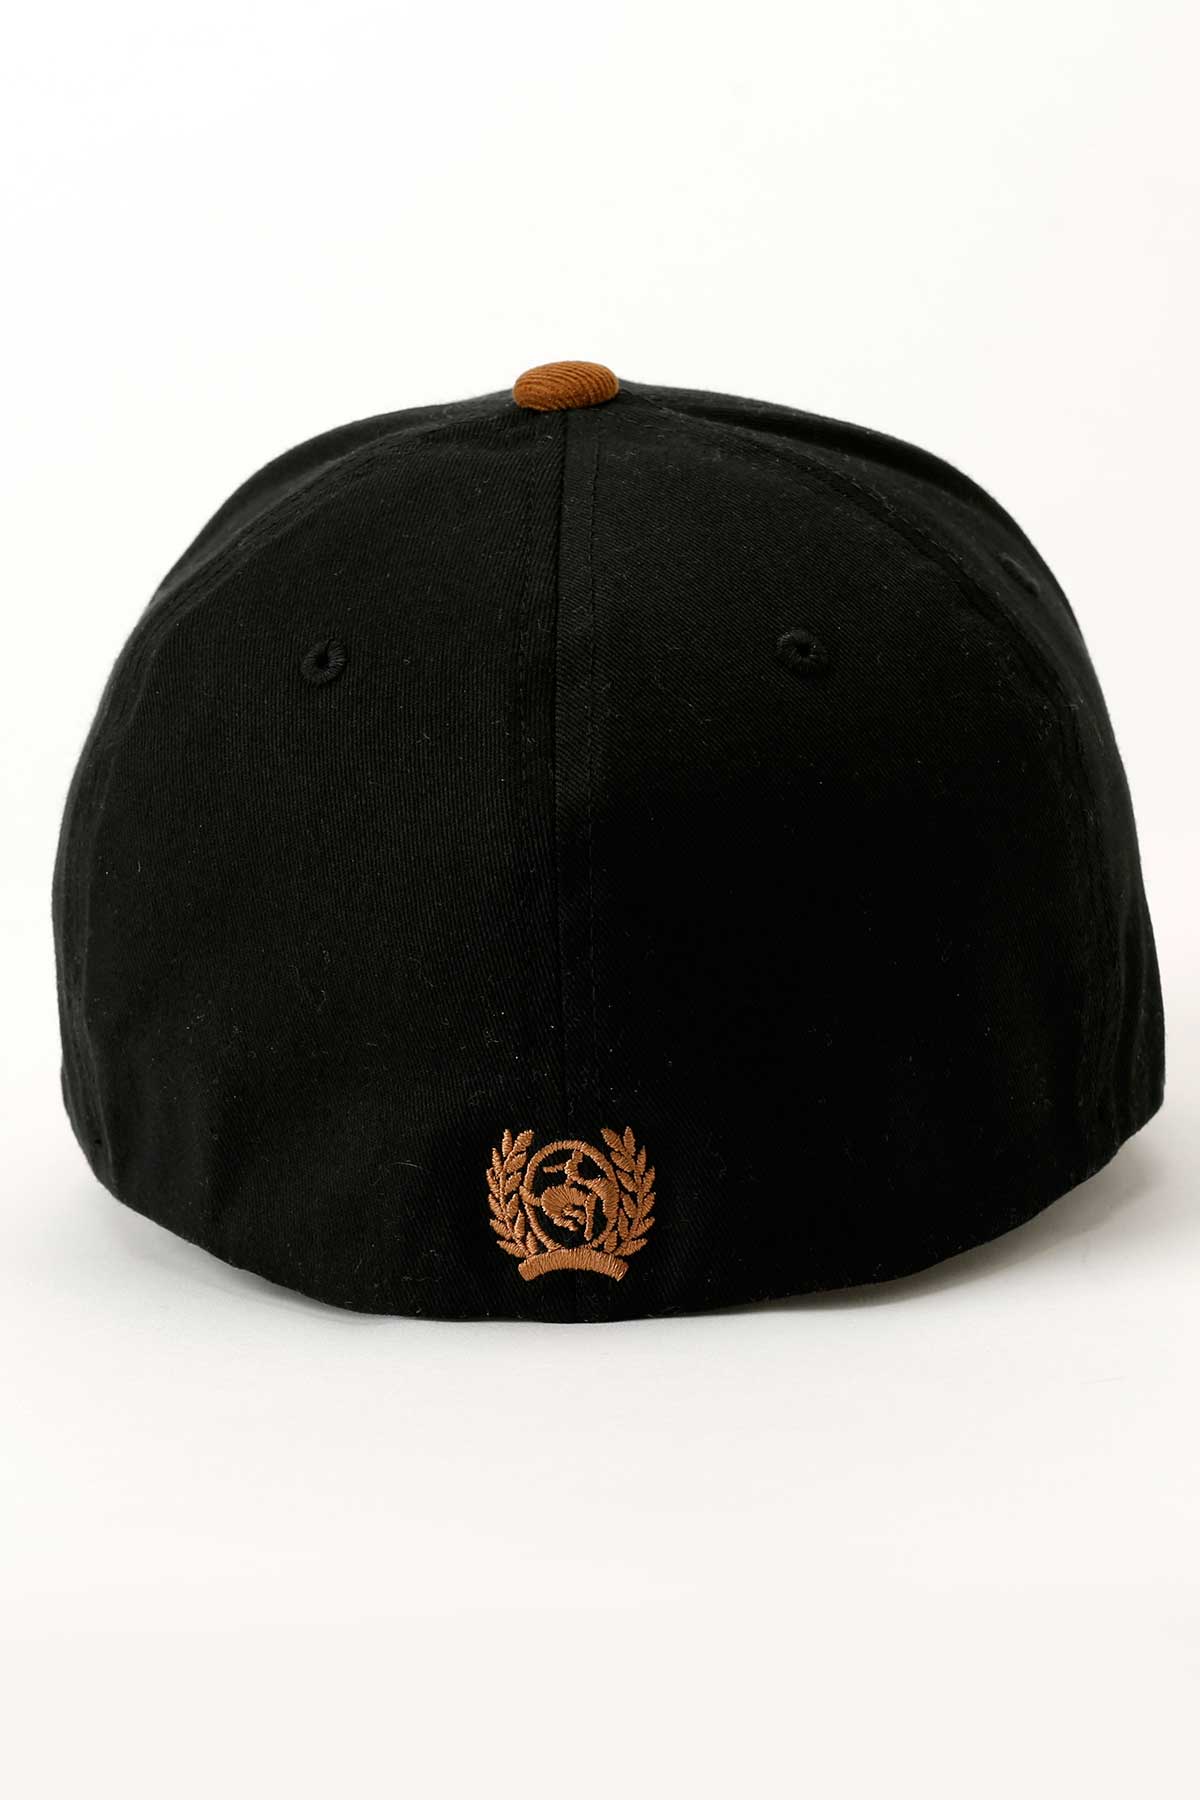 CINCH BLACK /BROWN LOGO CAP